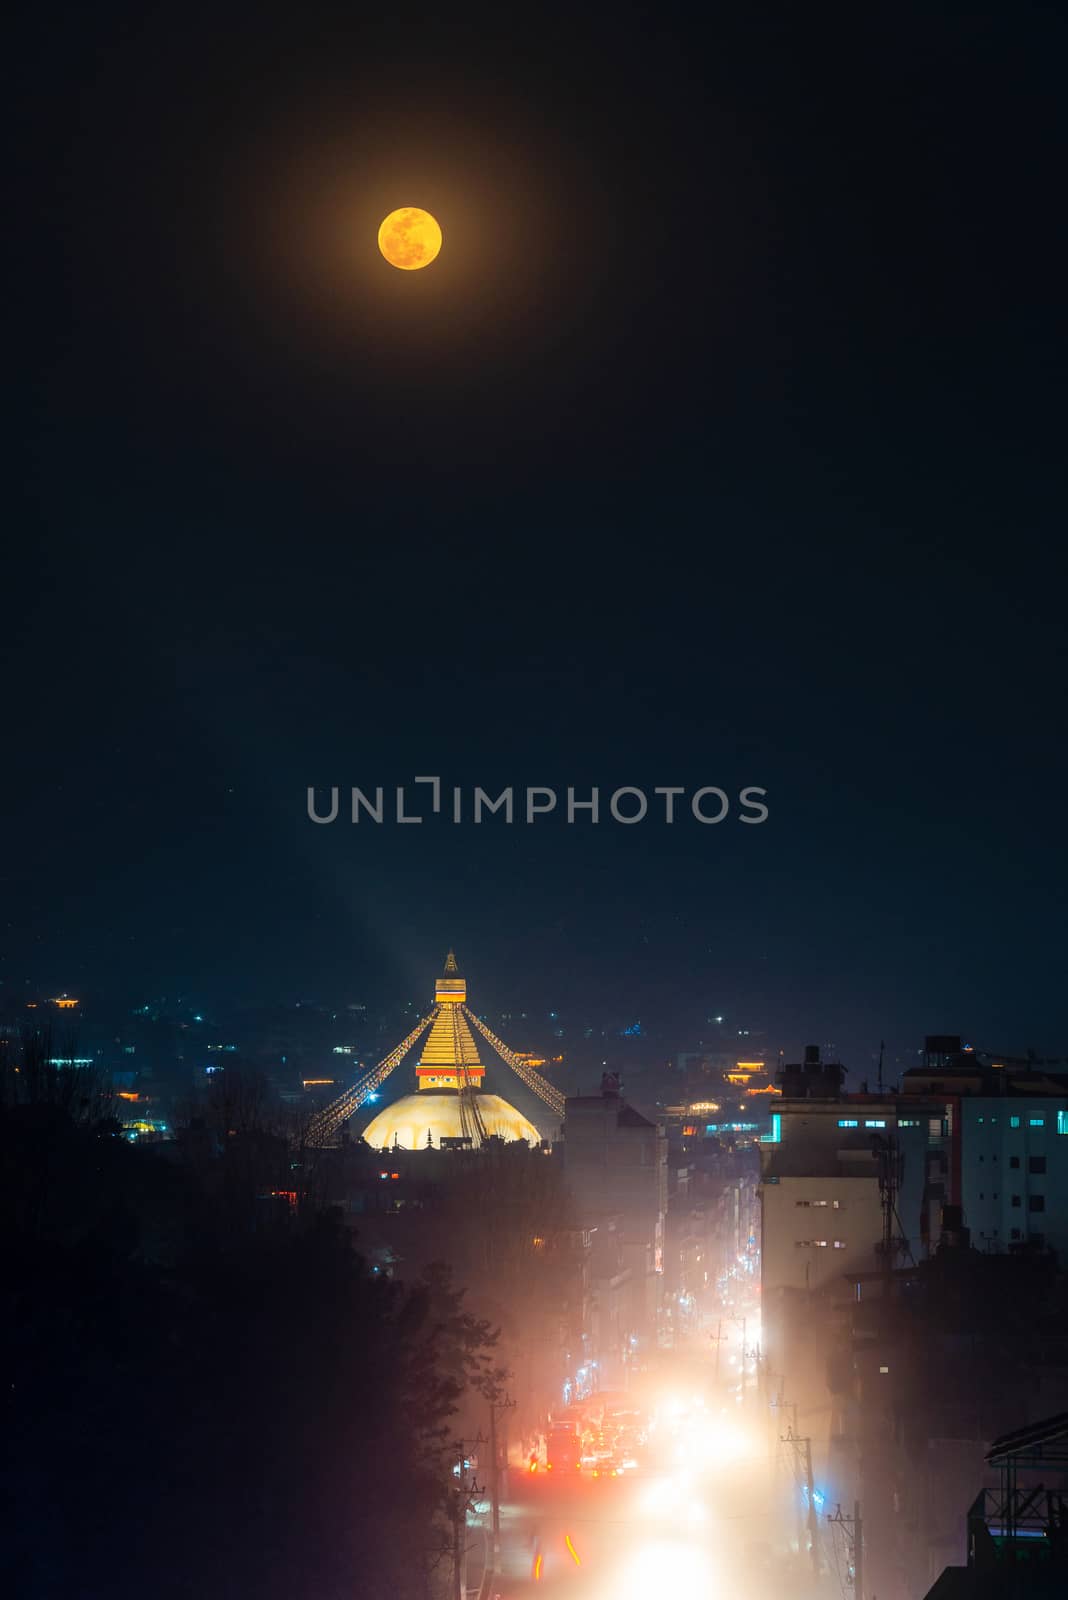 Full Moon over Boudhanath stupa at night, Nepal by dutourdumonde